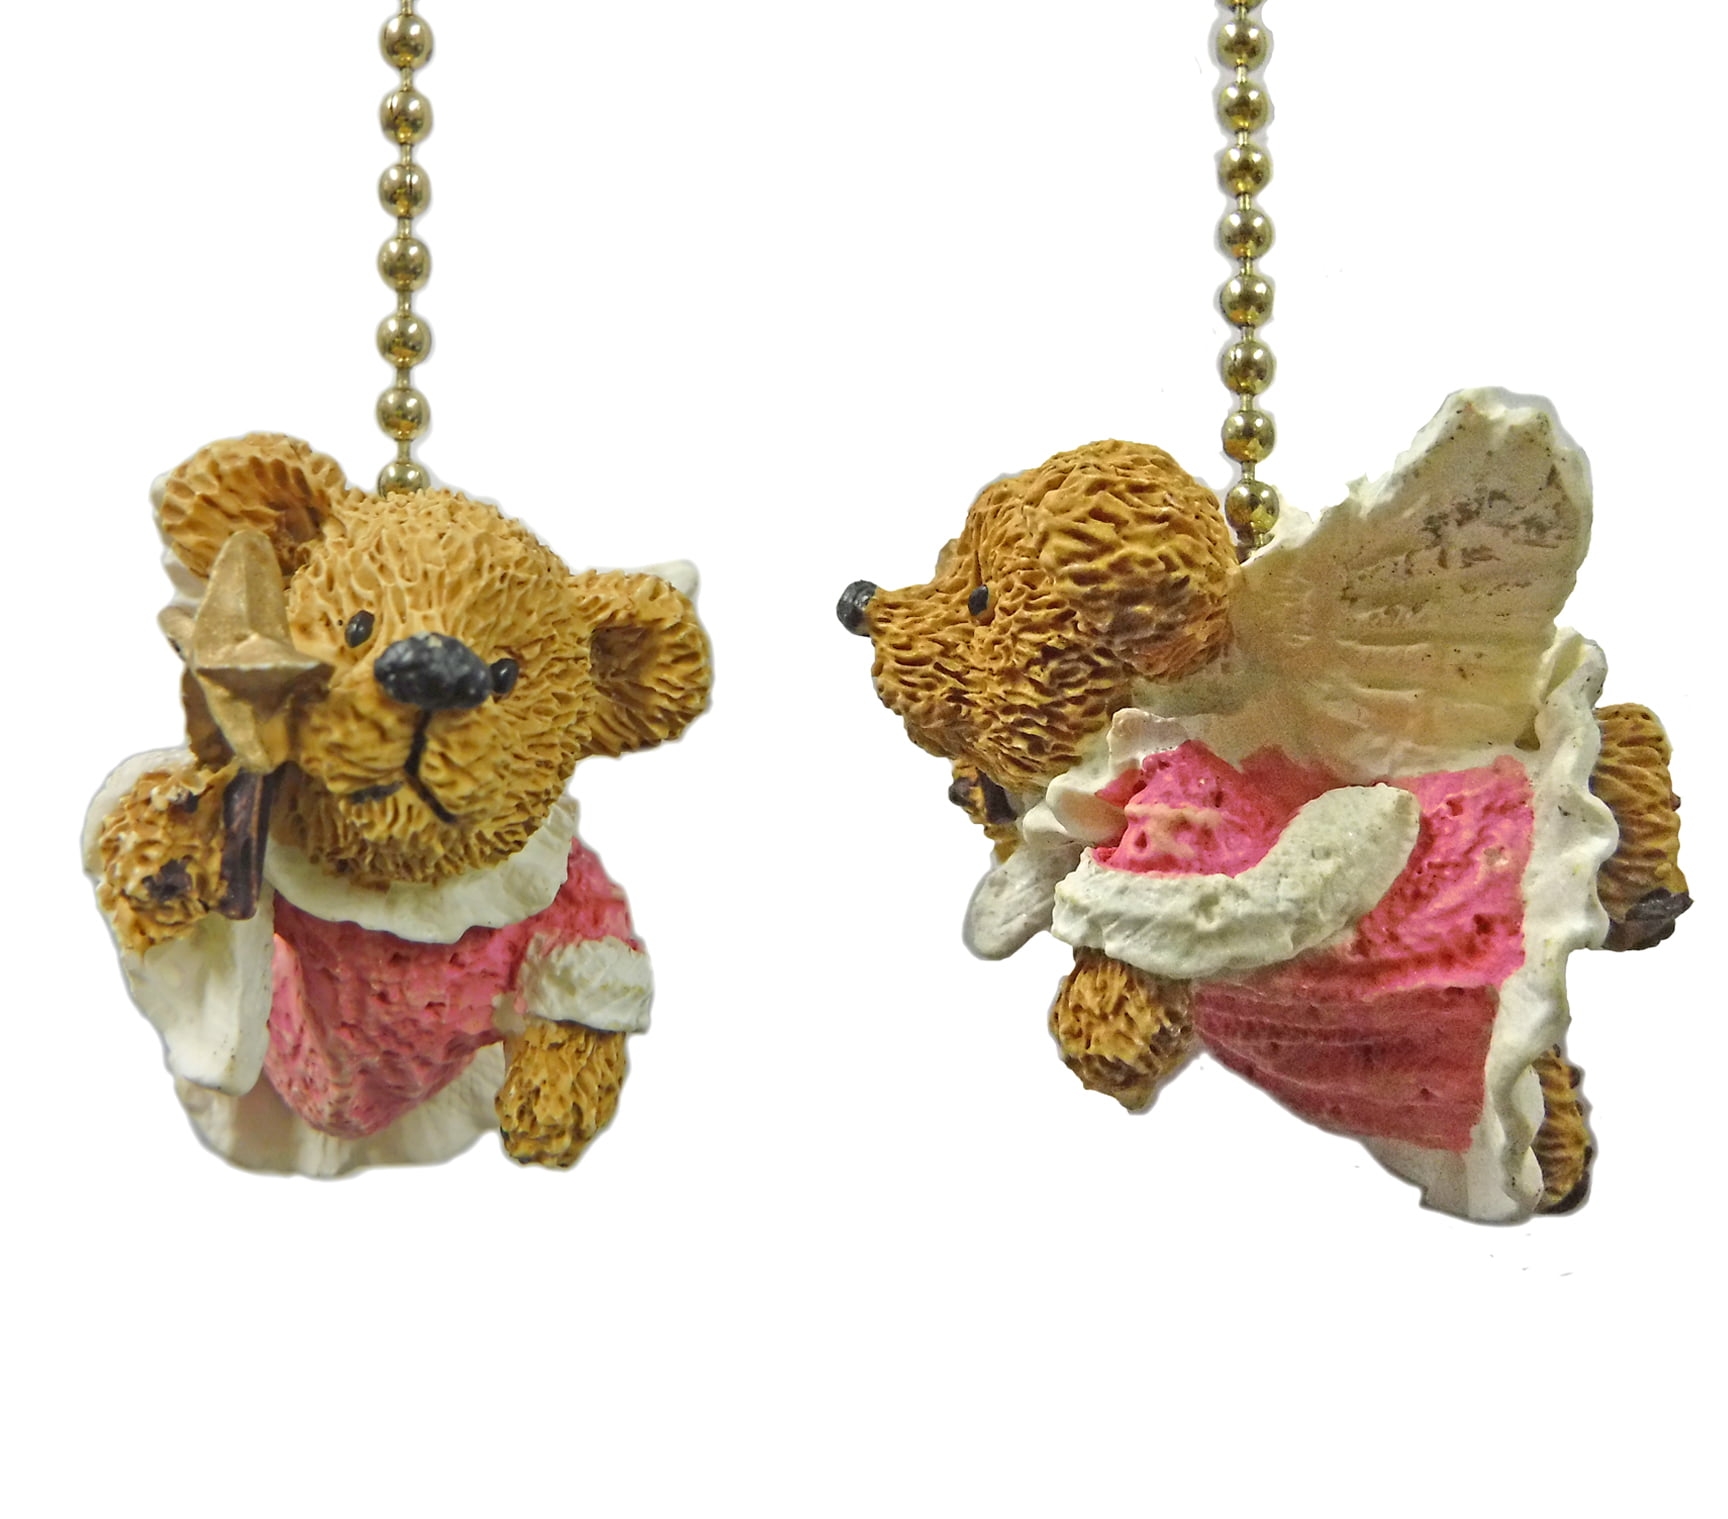 Adorable Little Bear Ceiling Fan Pull Chain Ornament 